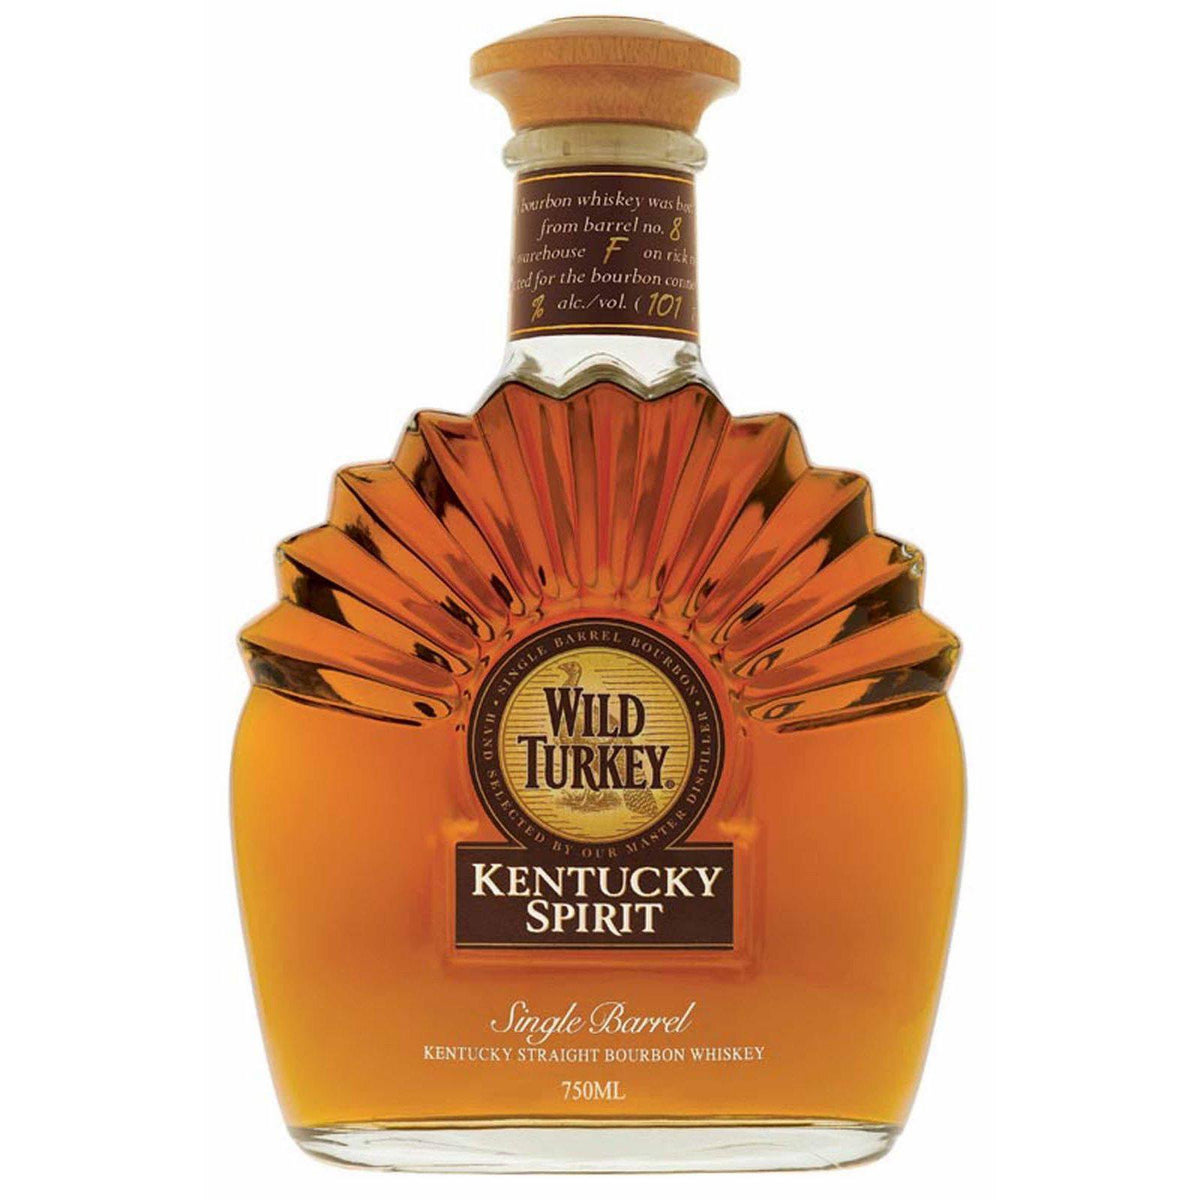 Wild Turkey Kentucky Spirit Single Barrel Bourbon Whiskey 750ml - Old Packaging